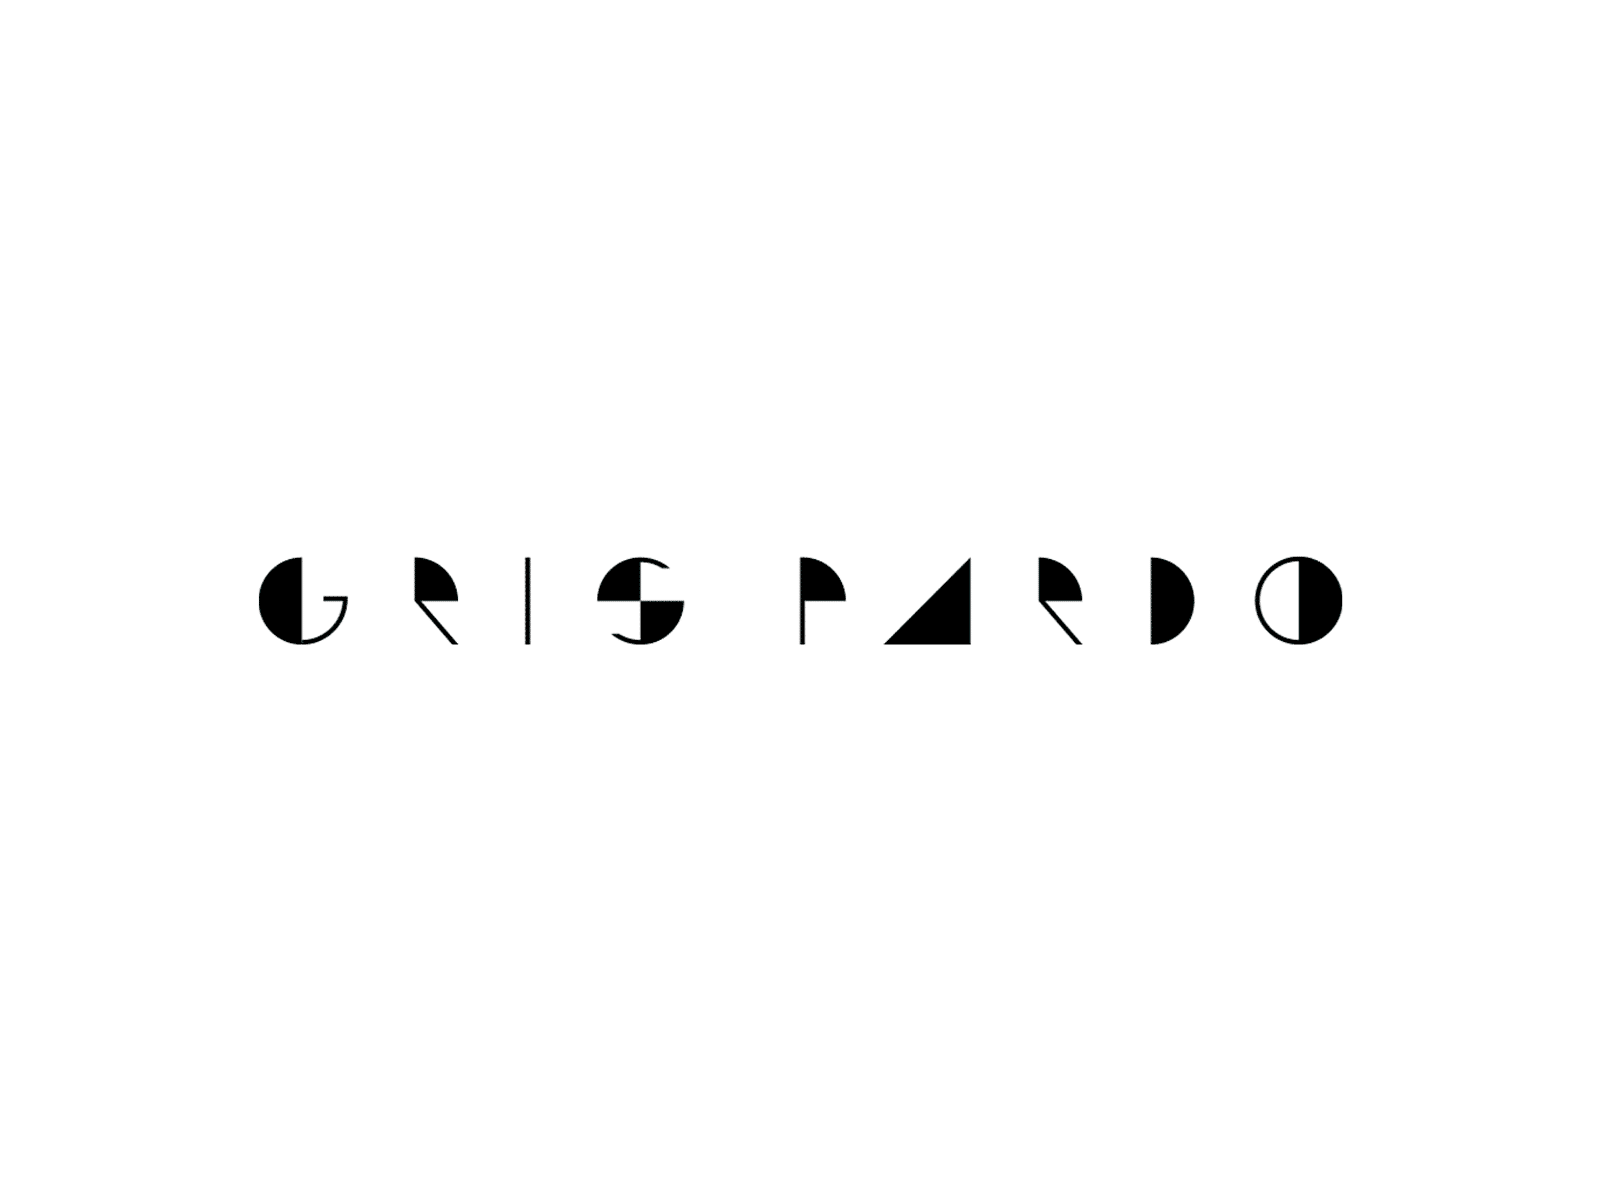 Gris Pardo Type Grid customtype geometry grid grid design grid layout leyda luz